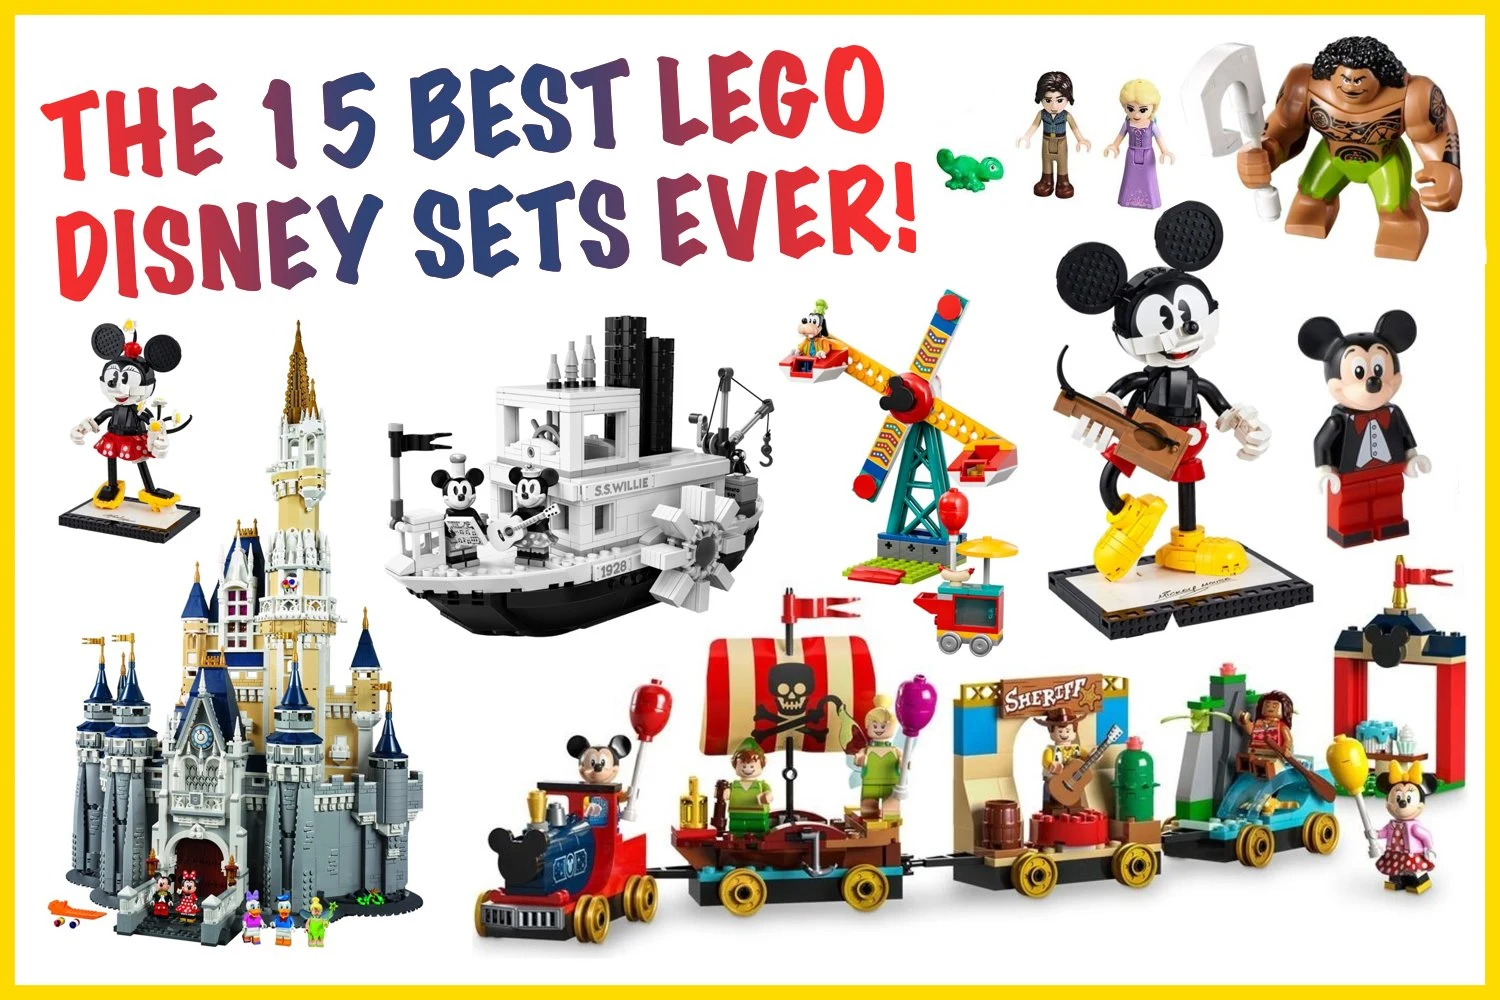 Best LEGO Disney sets ever feature image